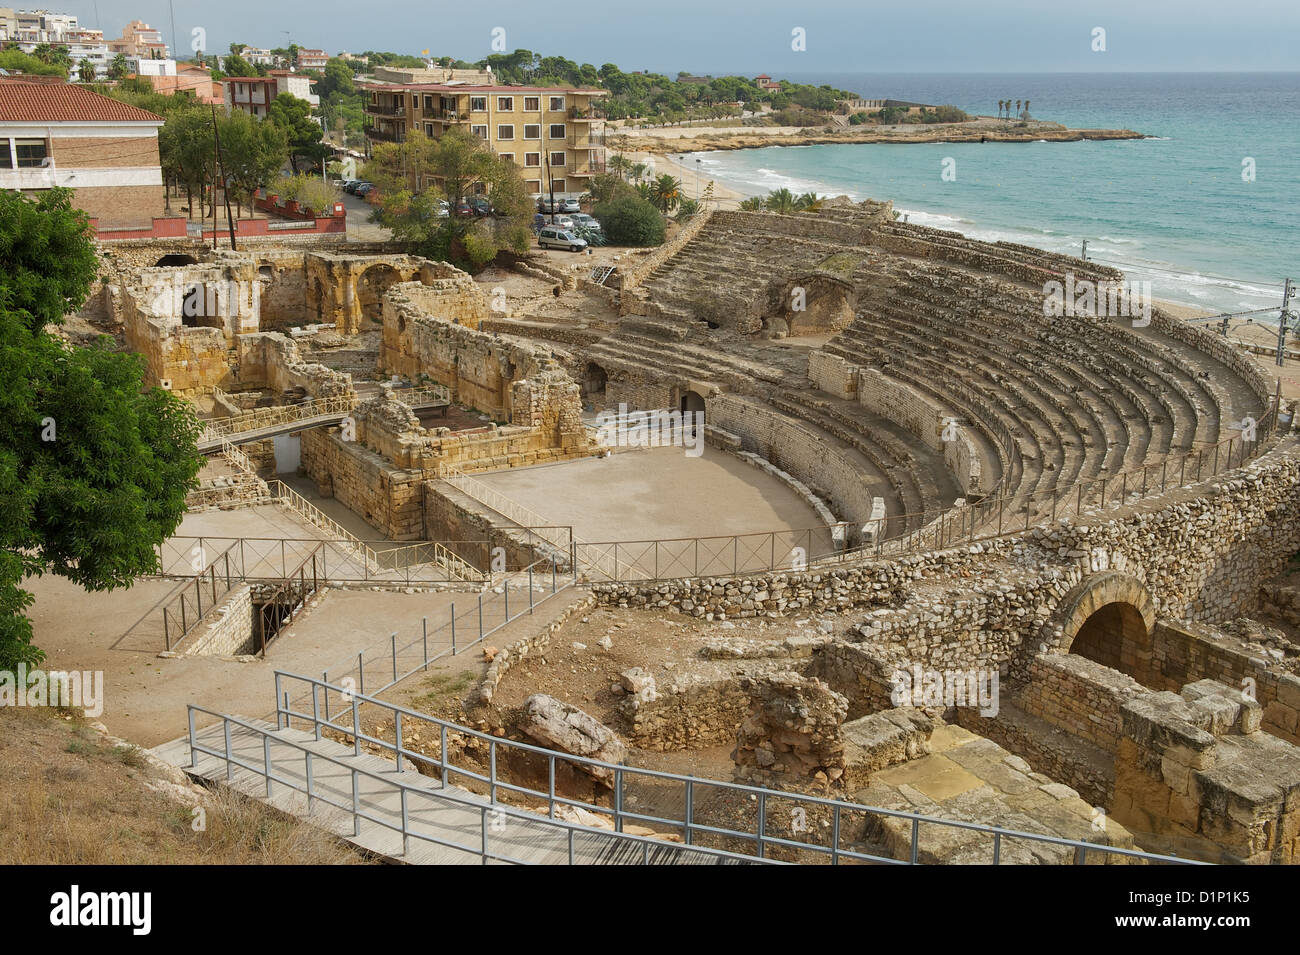 Roman ampitheatre with sea in background, Tarragona, Spain Stock Photo